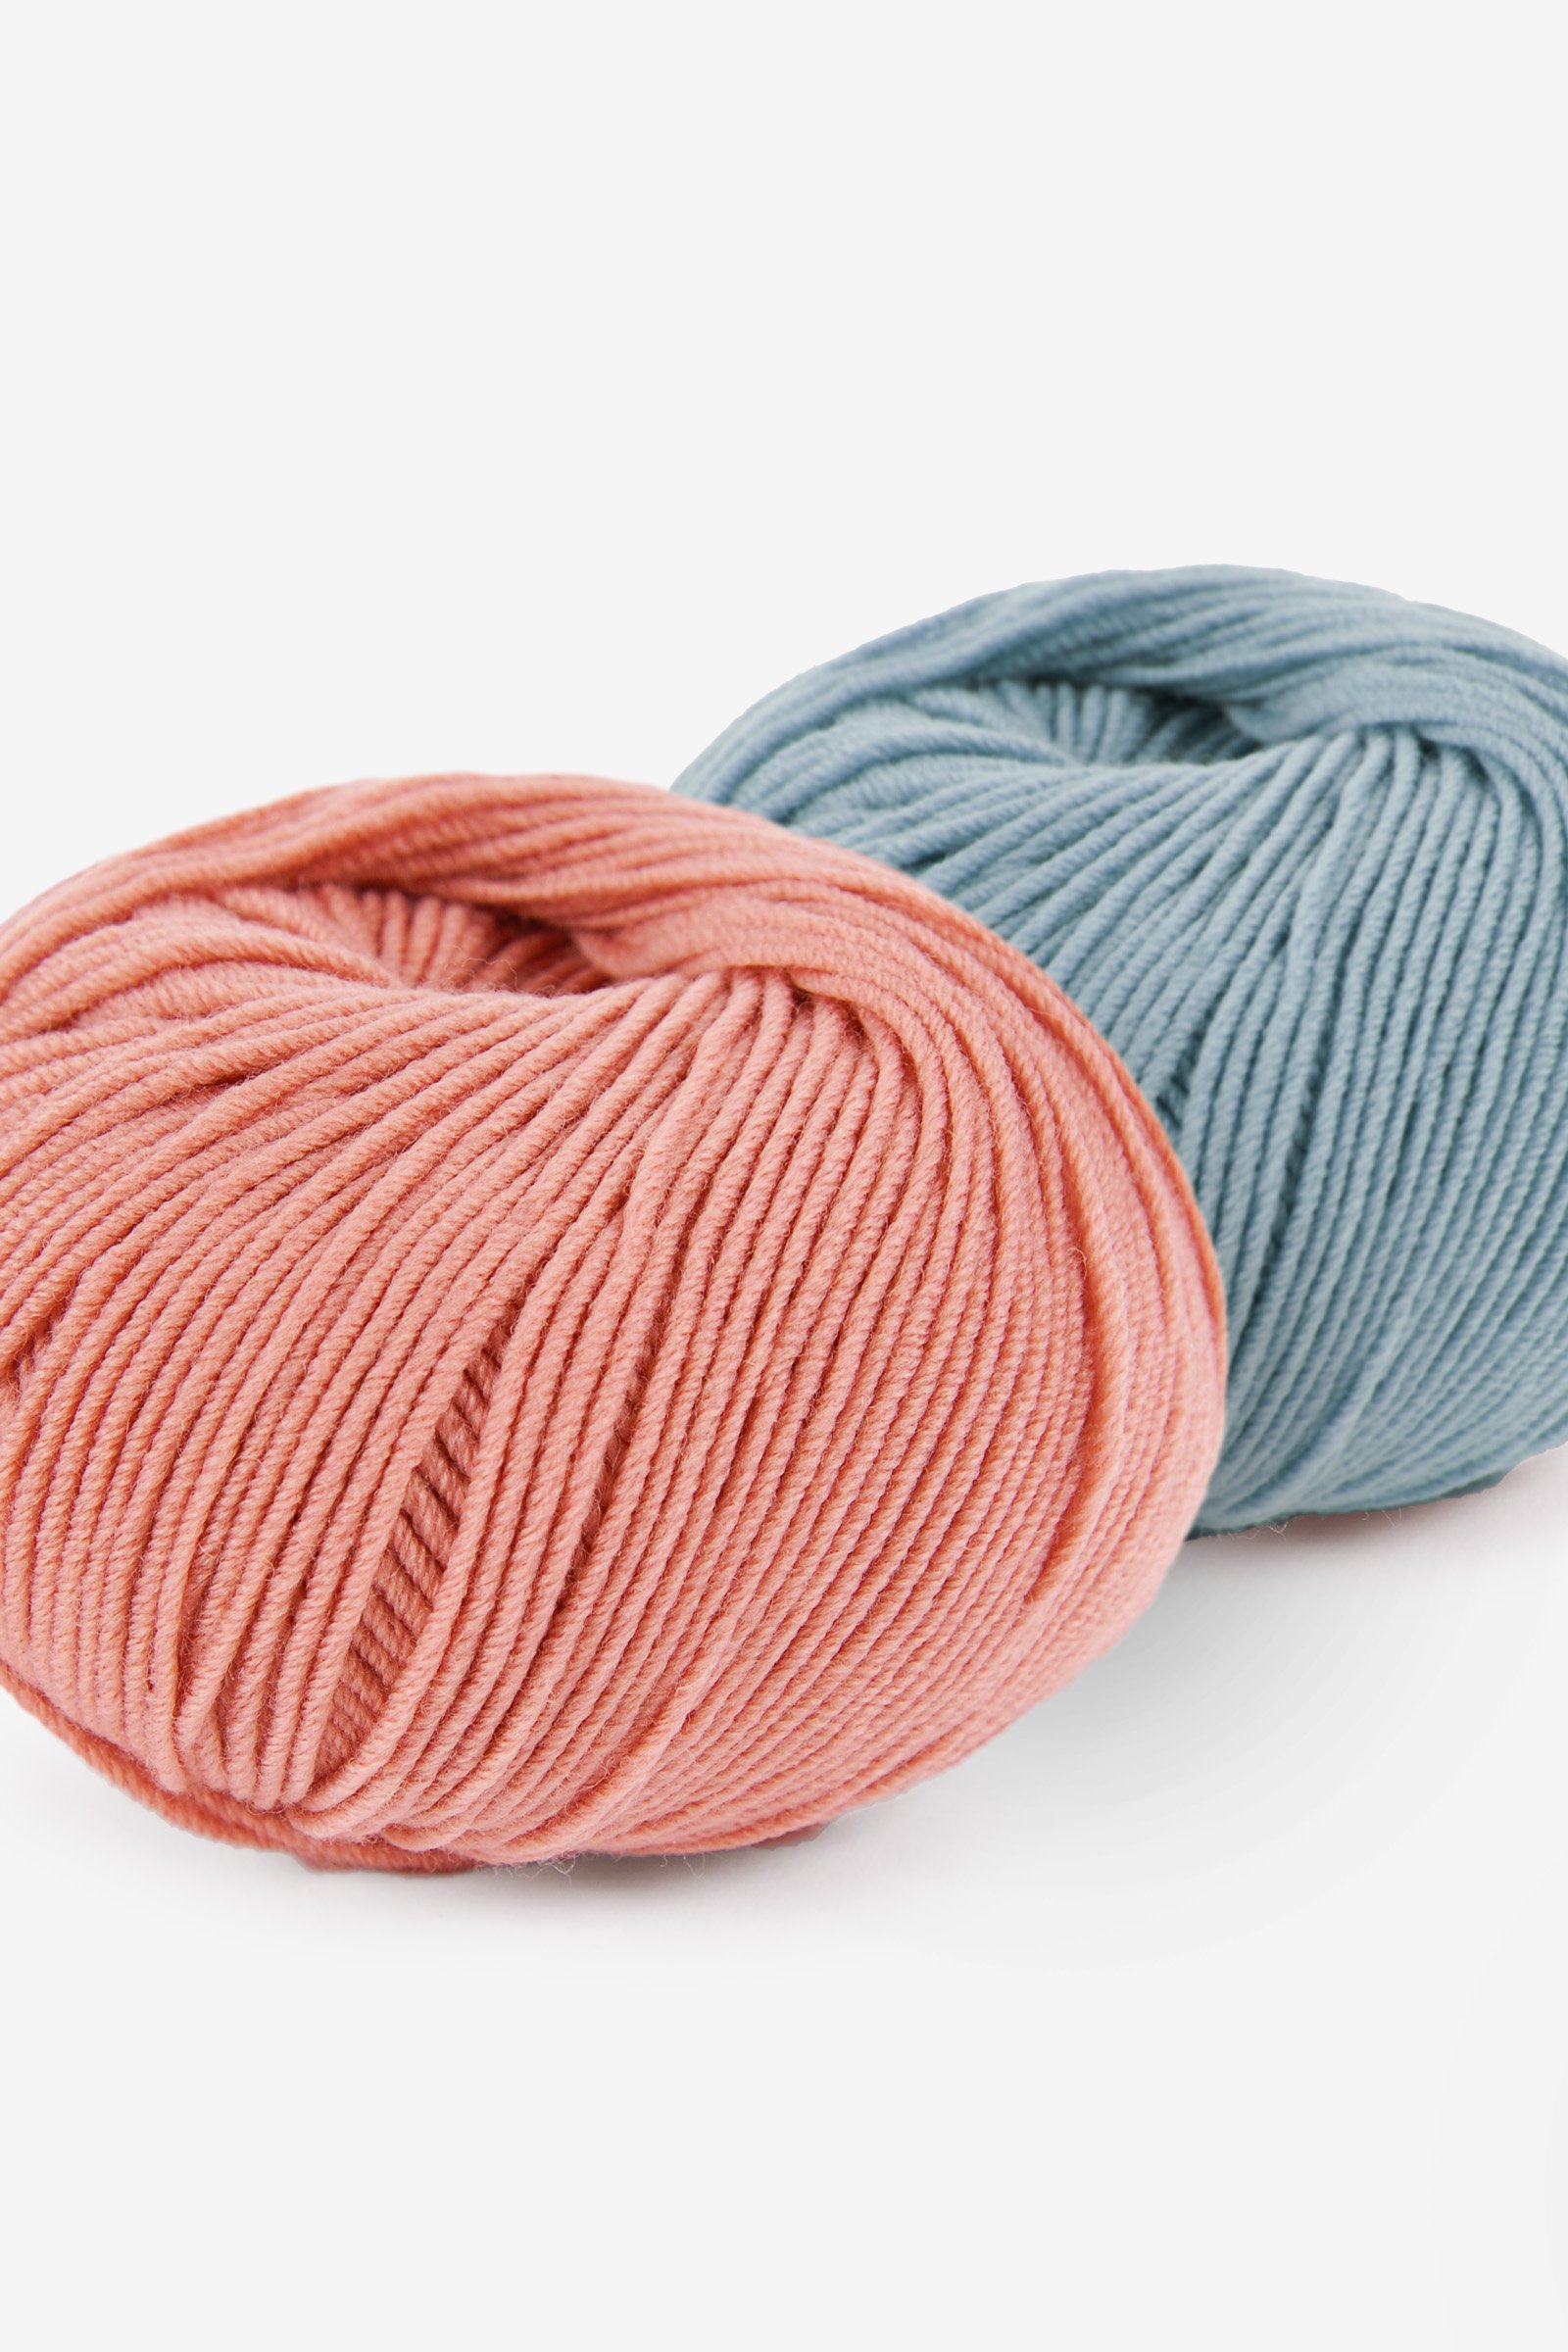 Woolly natural knitting lana merino